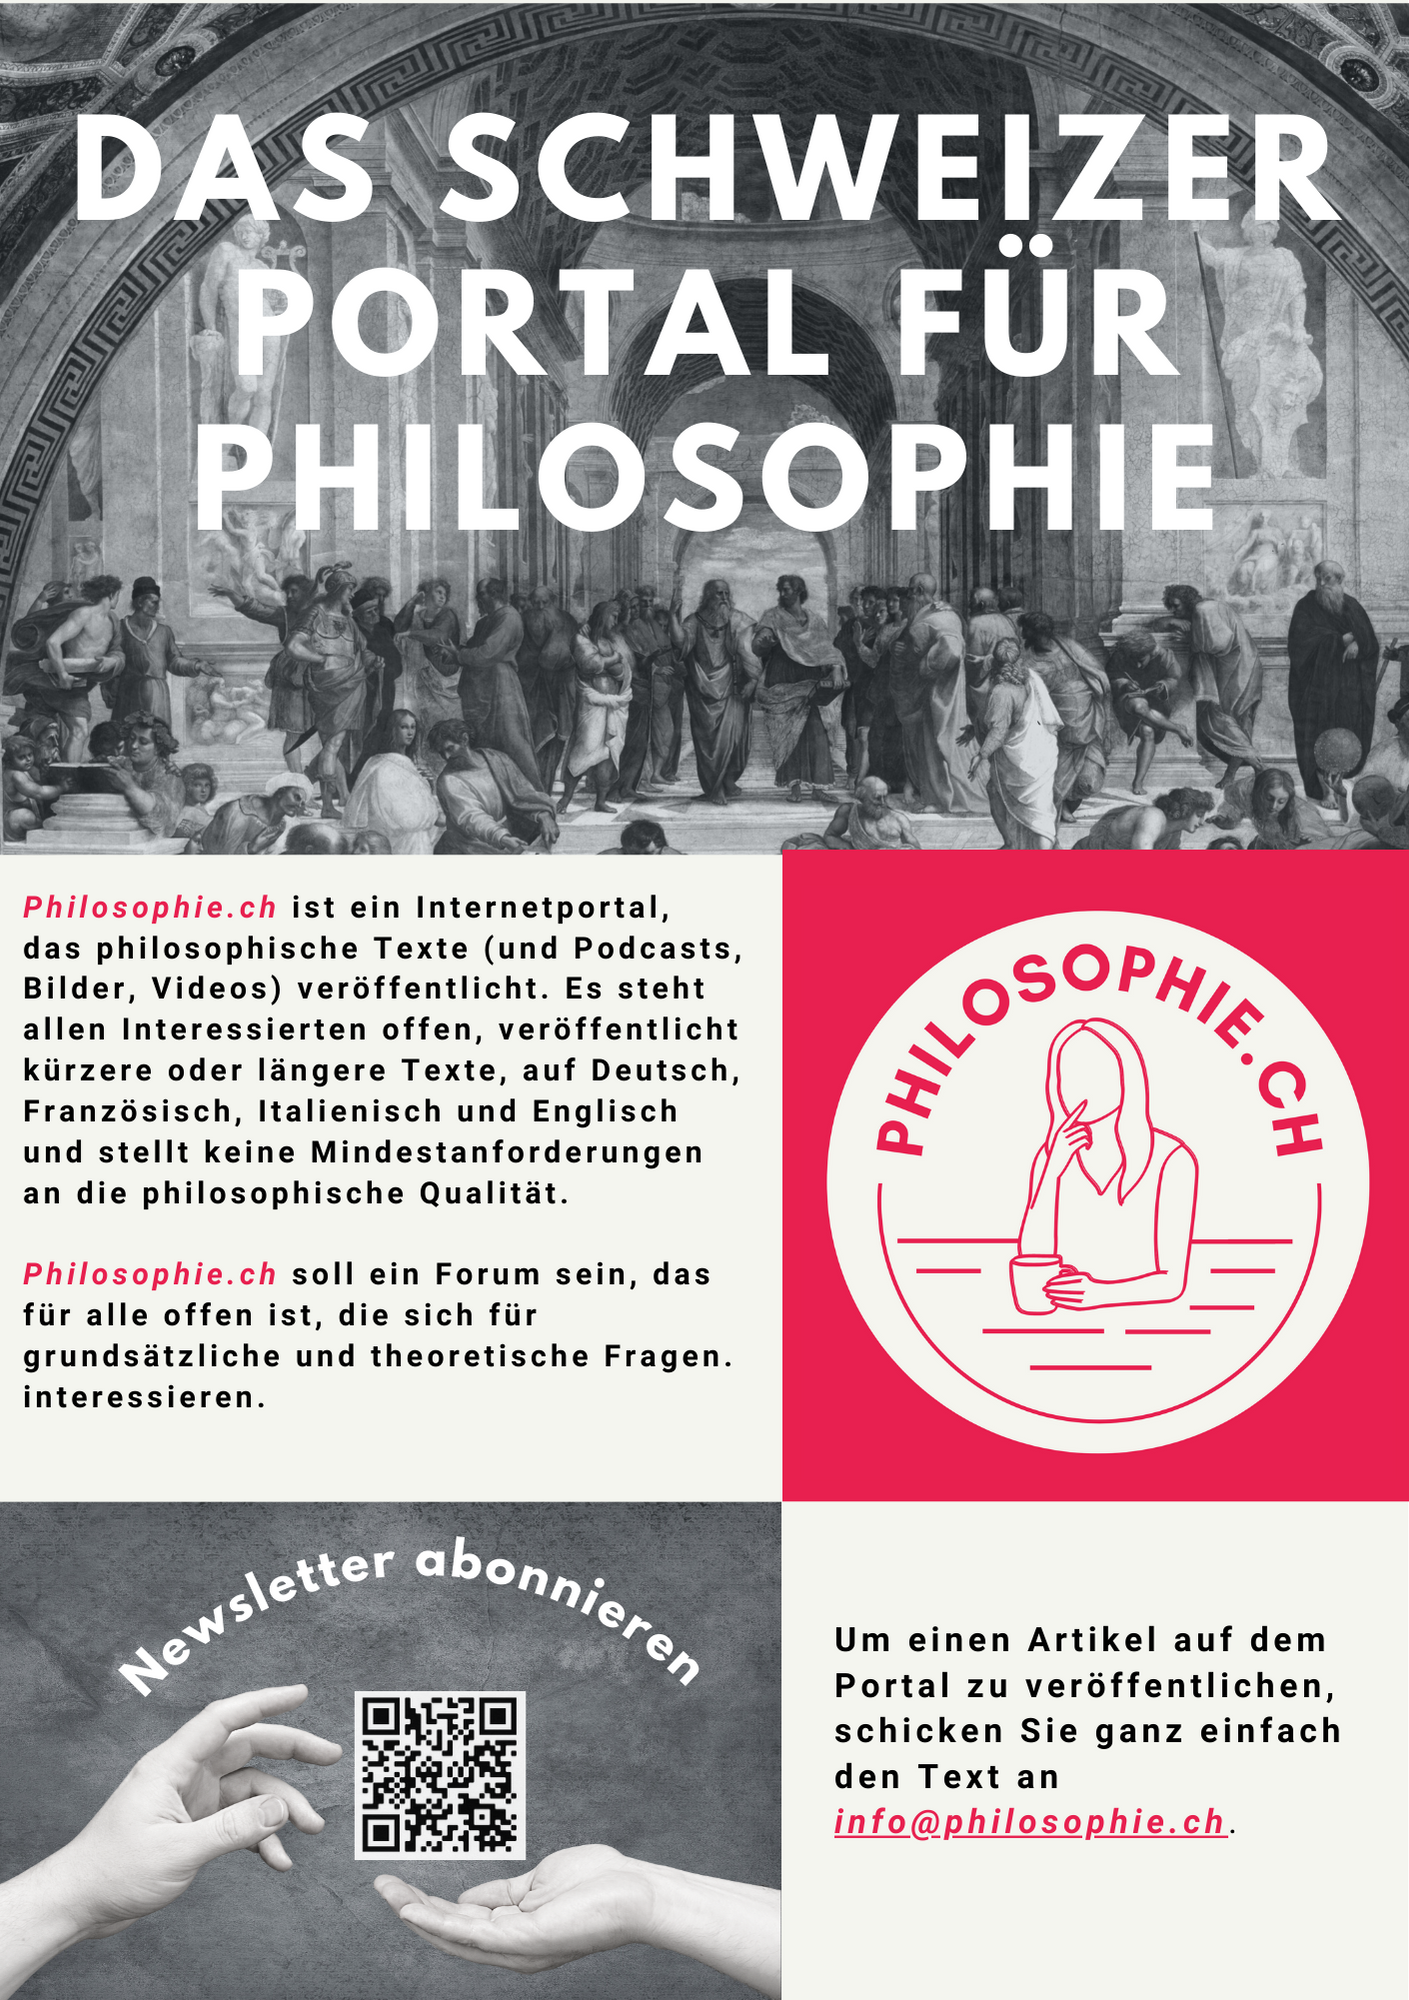 Philosophie.ch flyer (1)